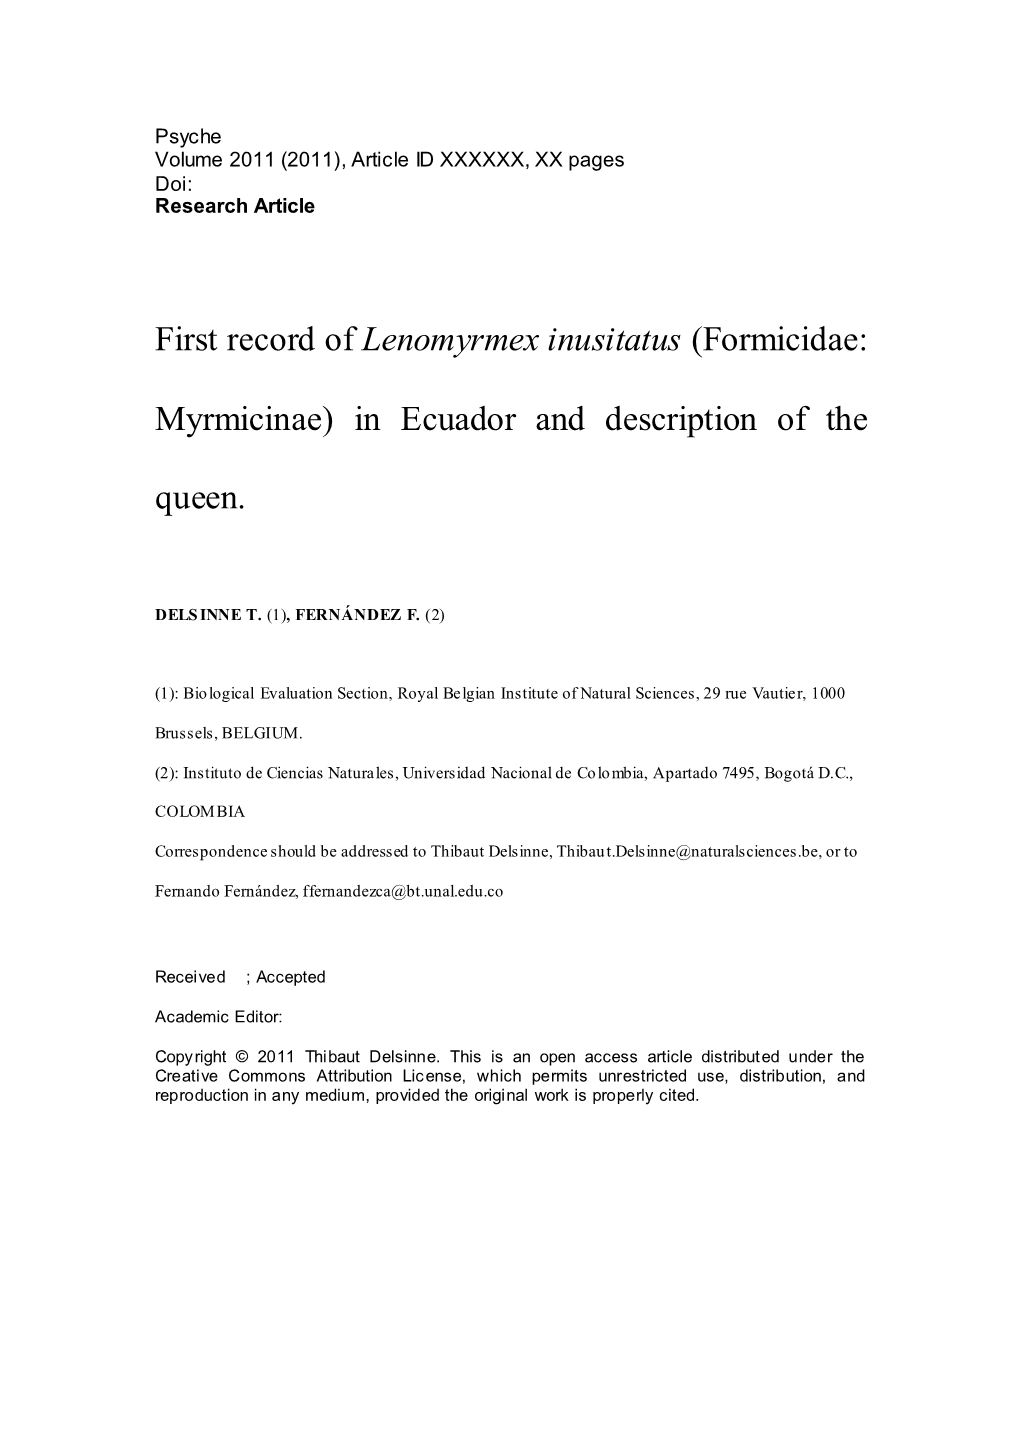 First Record of Lenomyrmex Inusitatus (Formicidae: Myrmicinae)